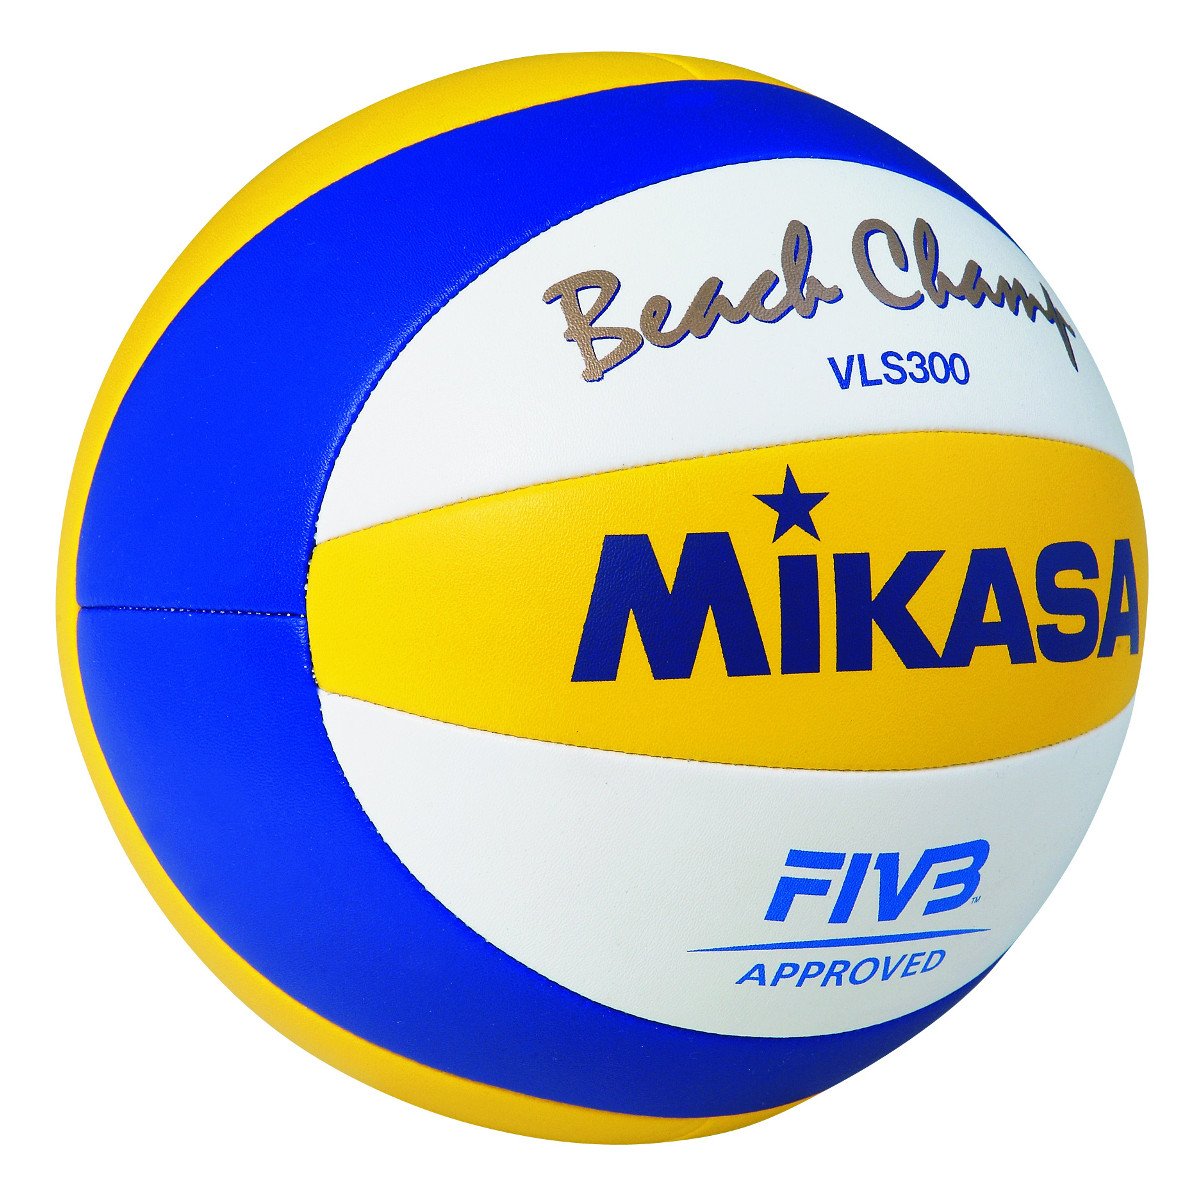 Mikasa Beach Champ VLS 300 DVV Beachvolleyball Spielball Größe 5 blau gelb weiß 